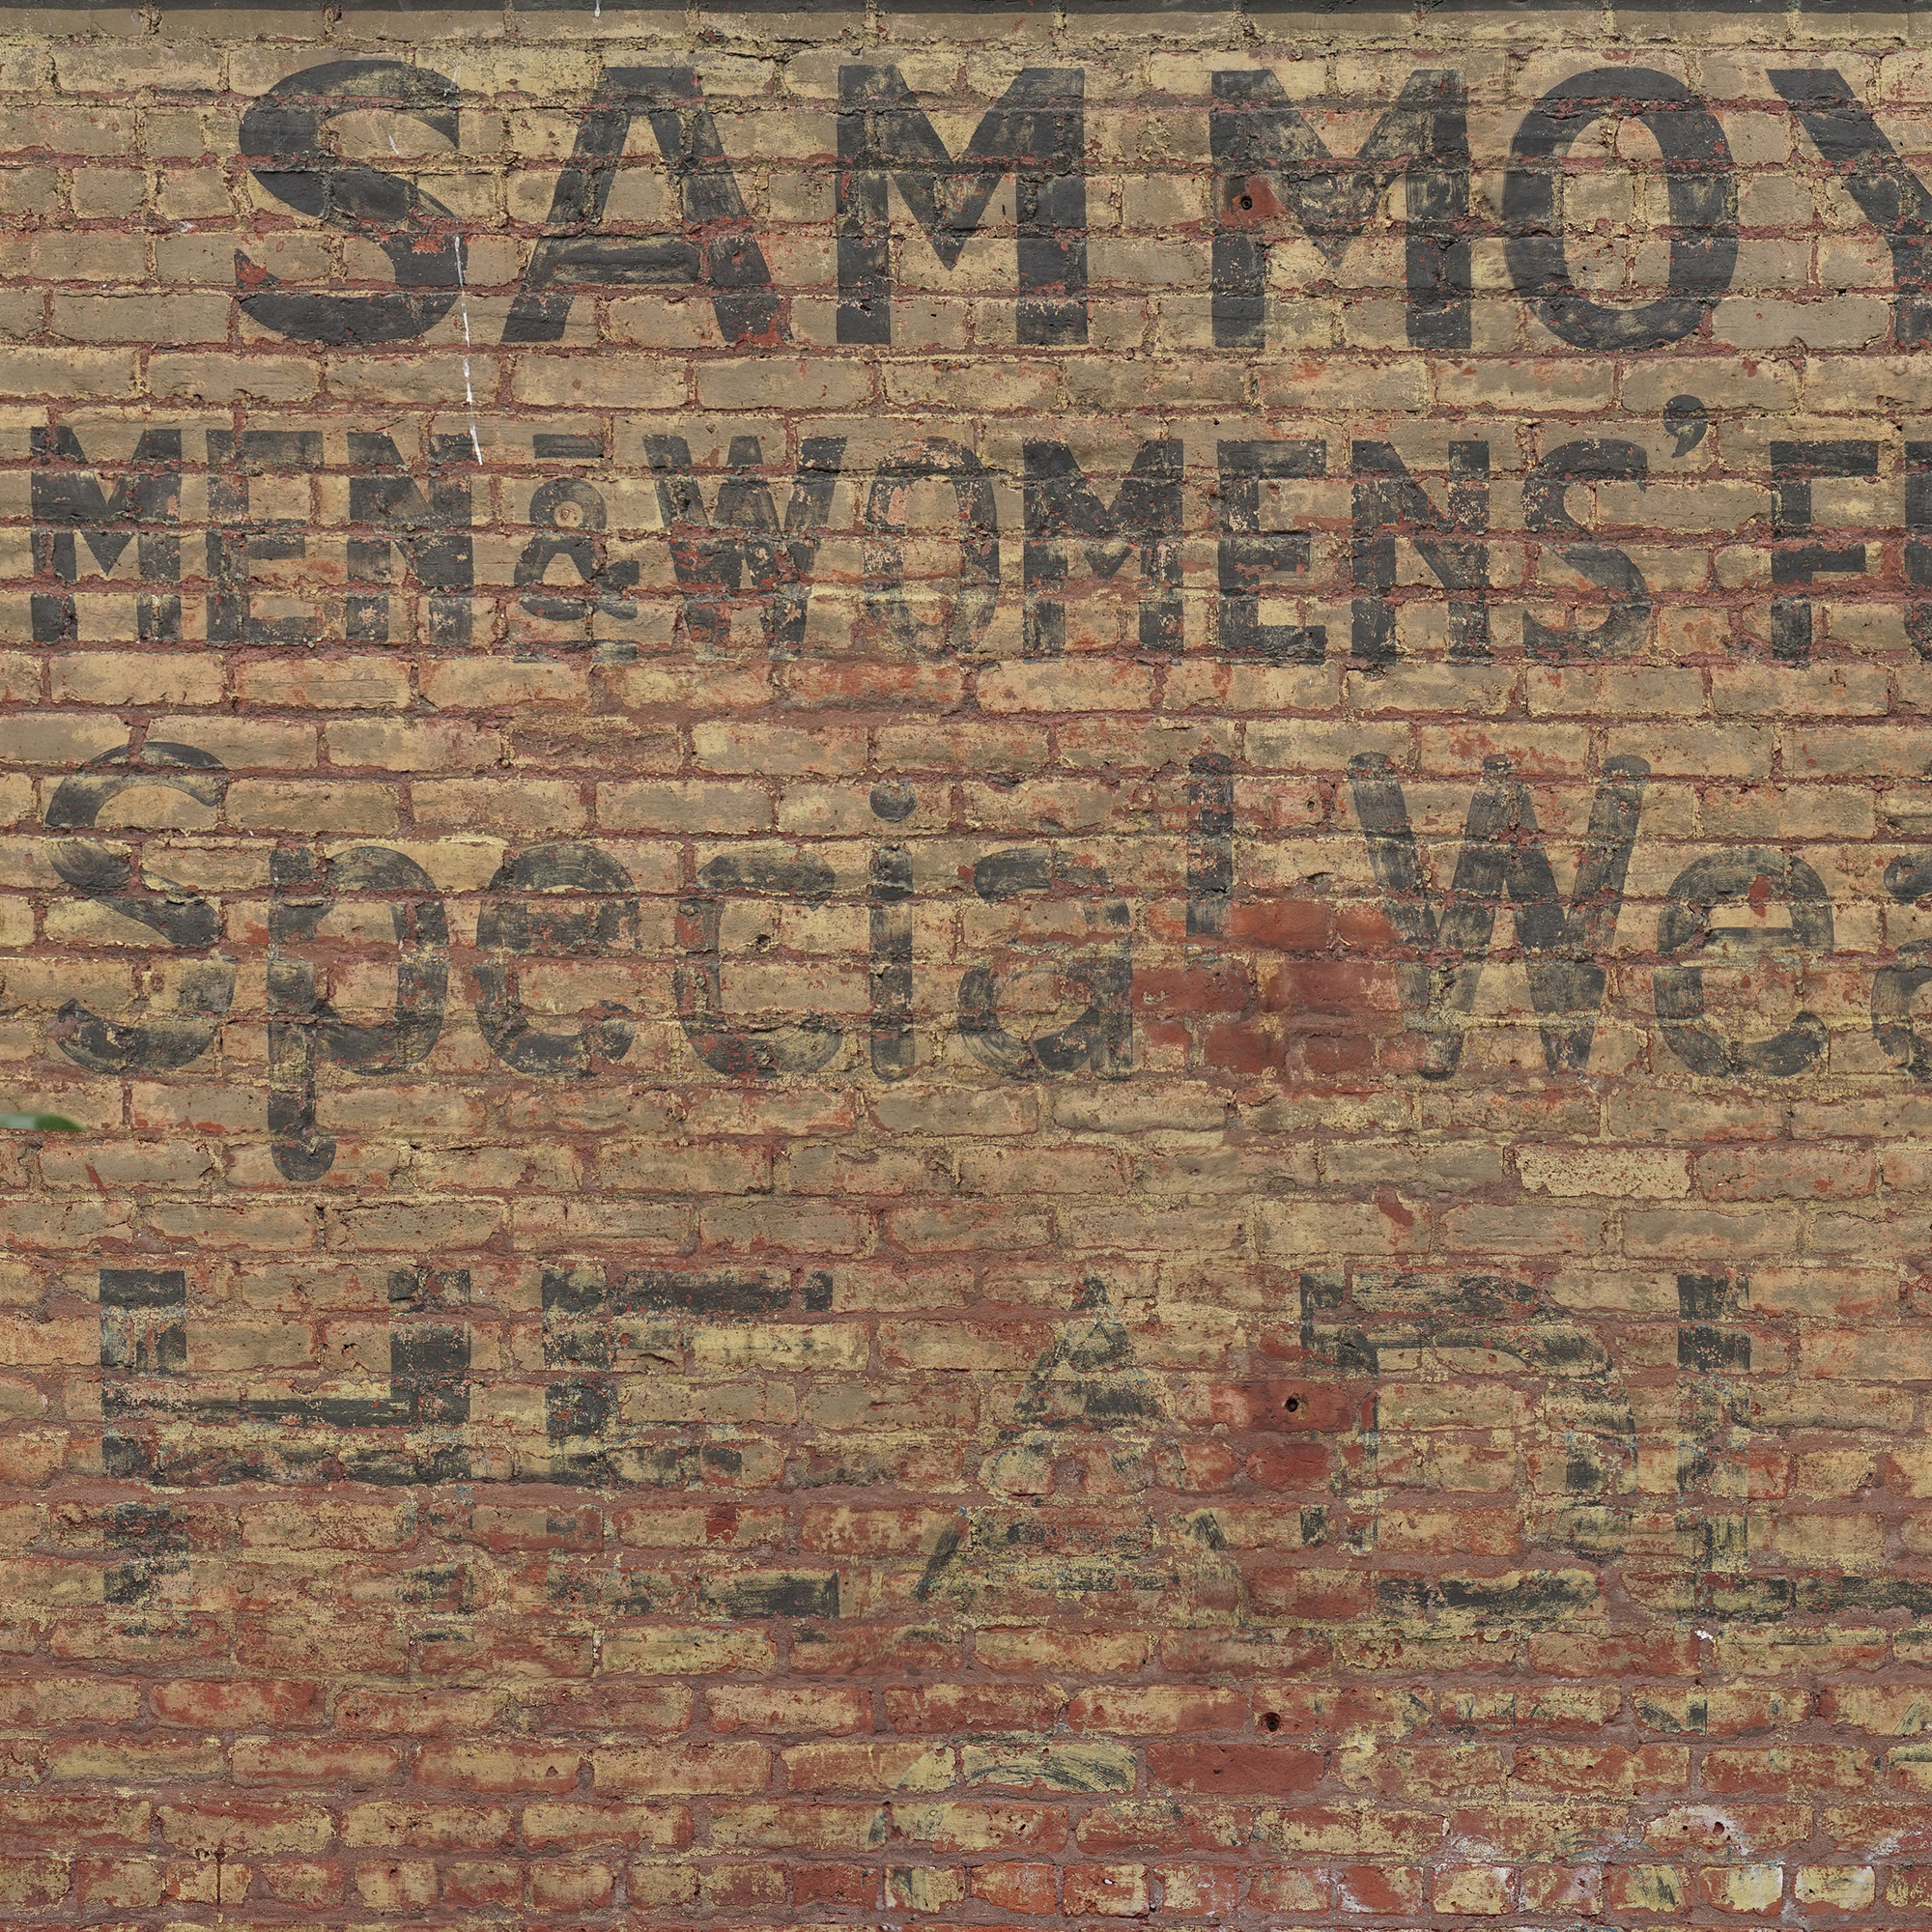 32 – Sam Moy & Co.